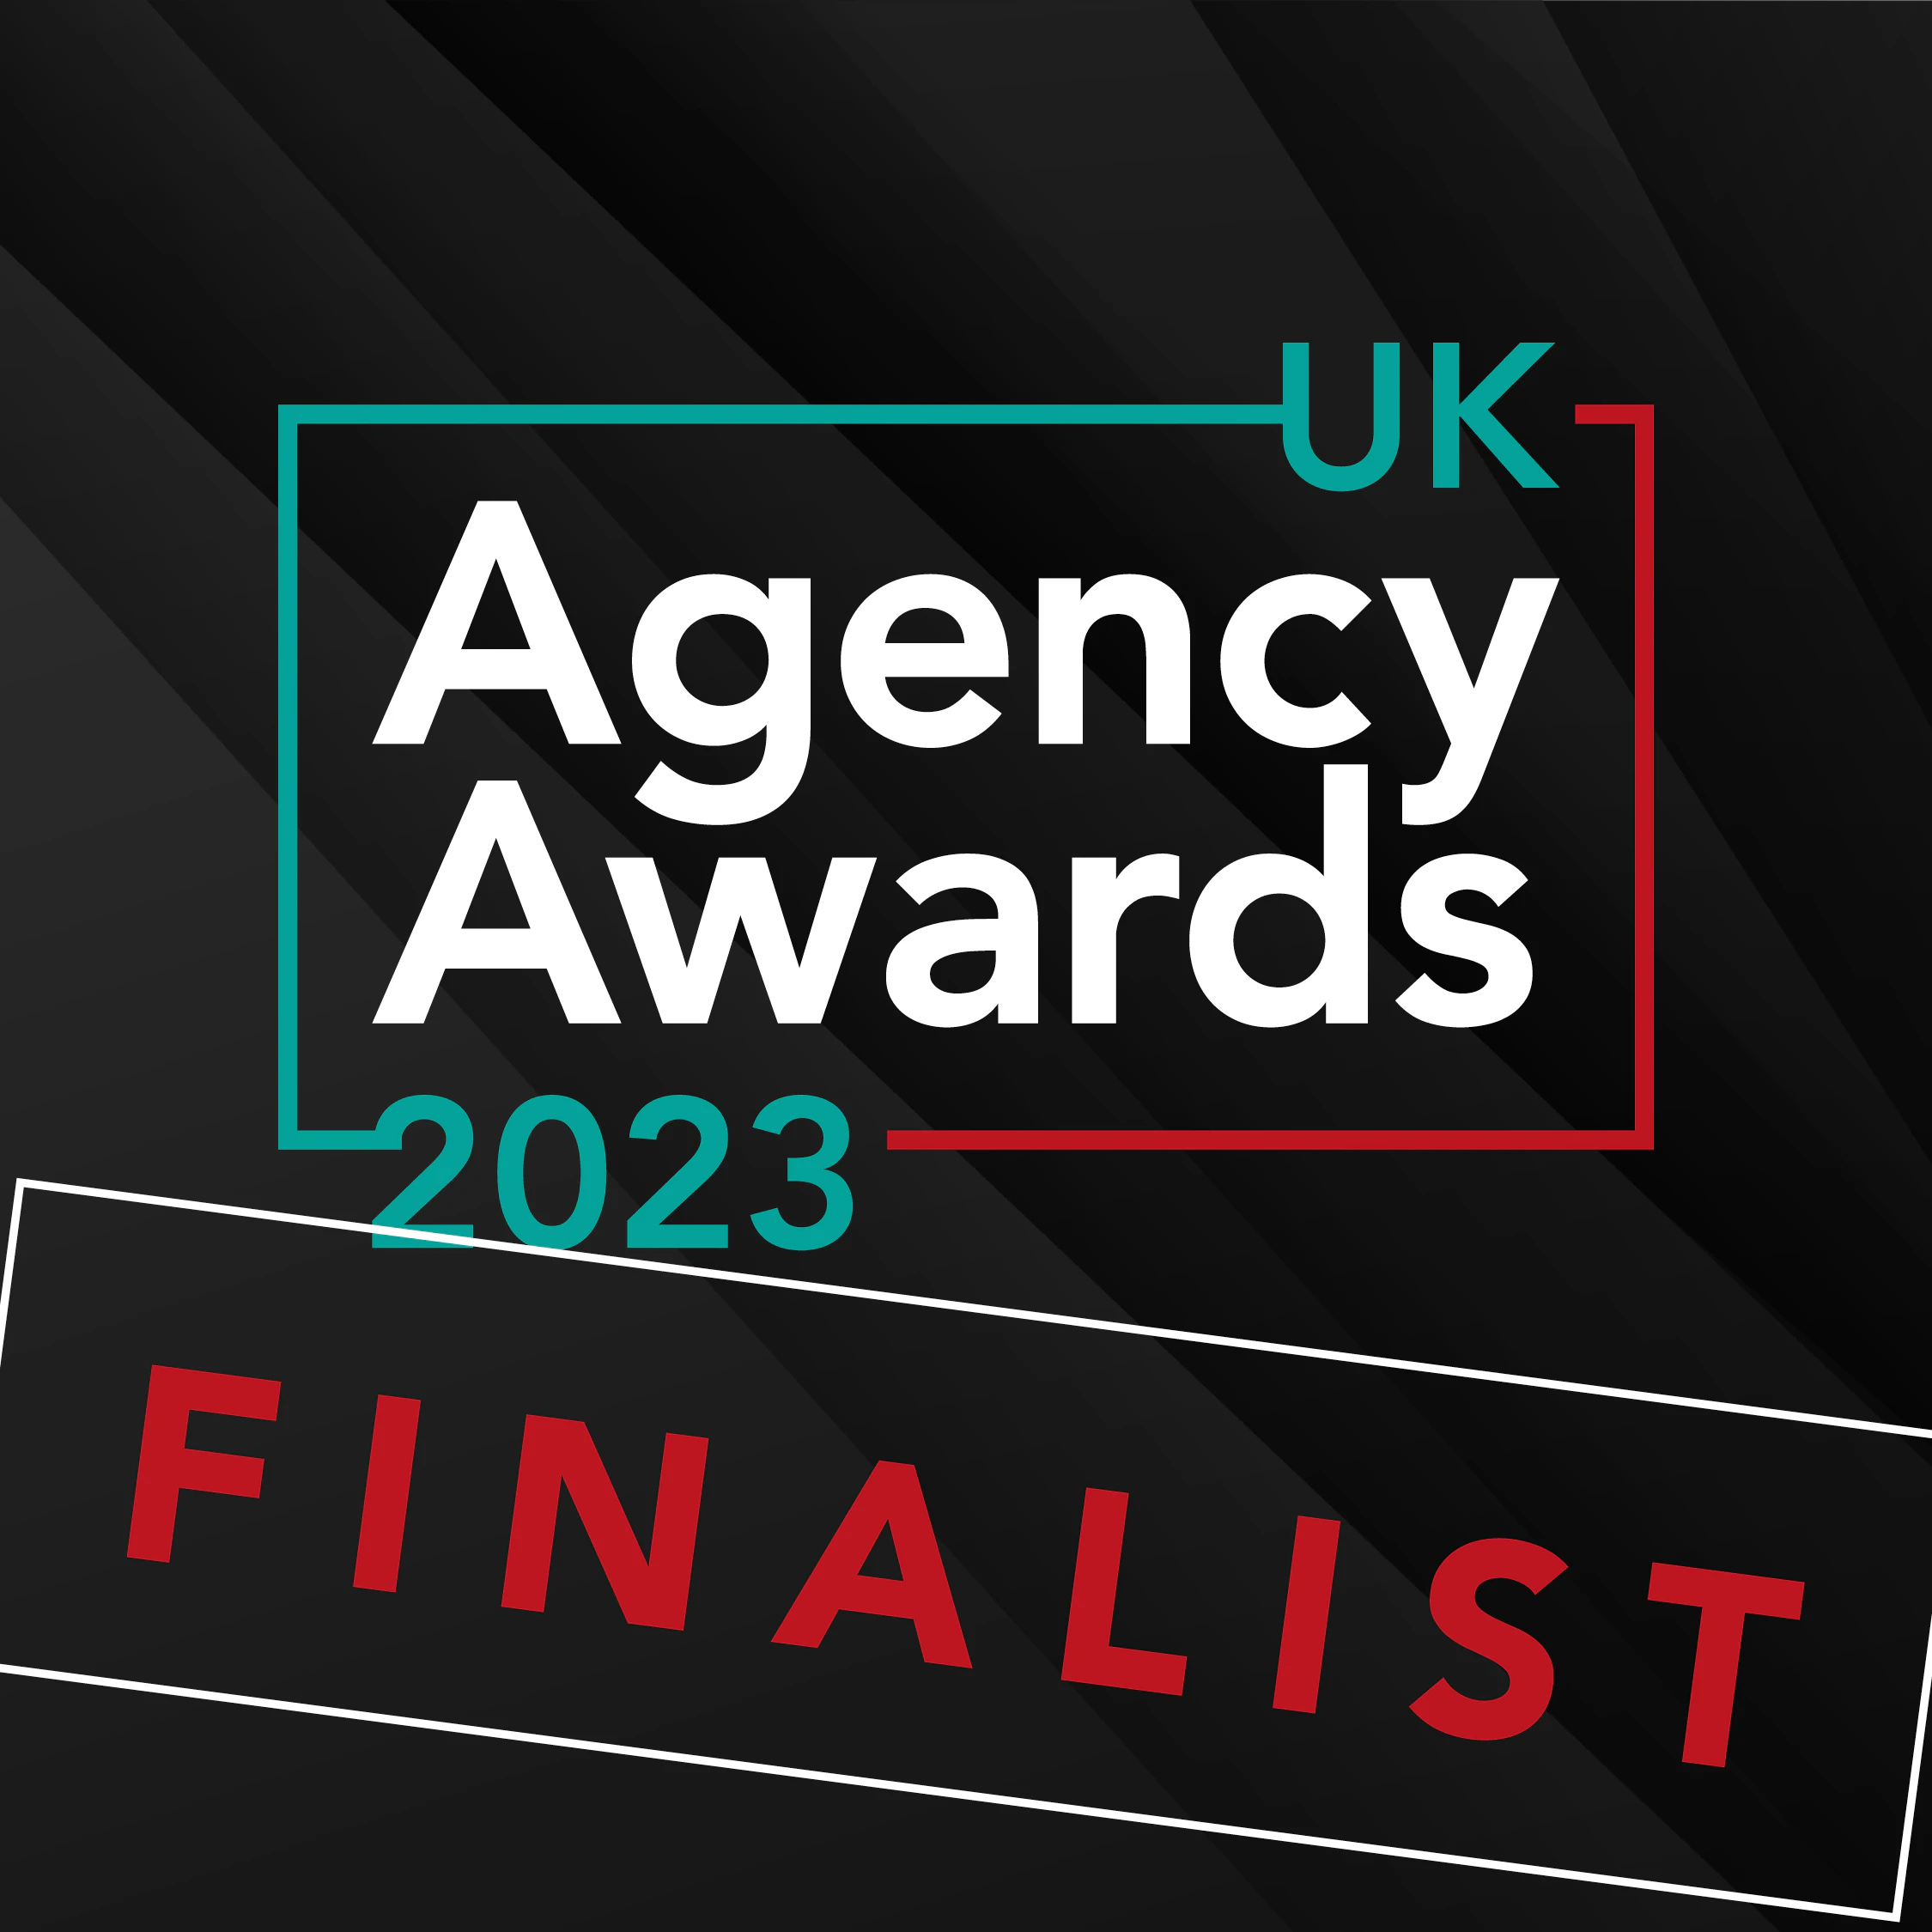 UK Agency Awards 2023 Finalist badge